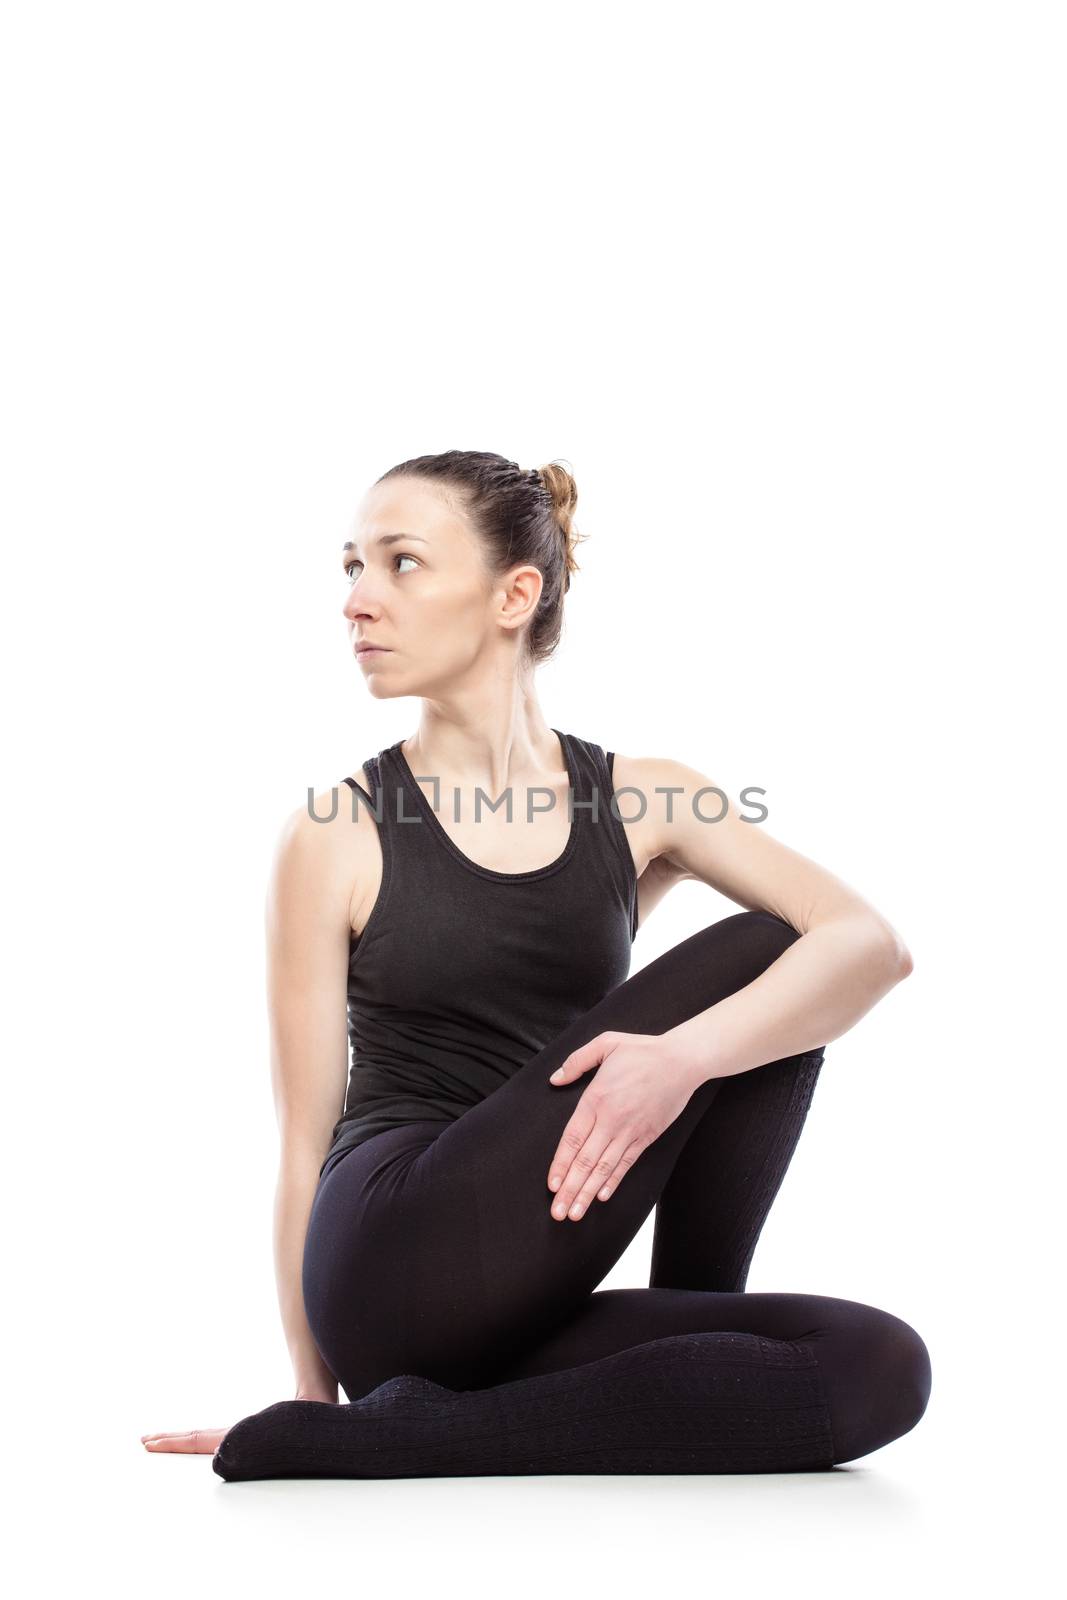 caucasian woman exercising pilates poses, isolated in studio